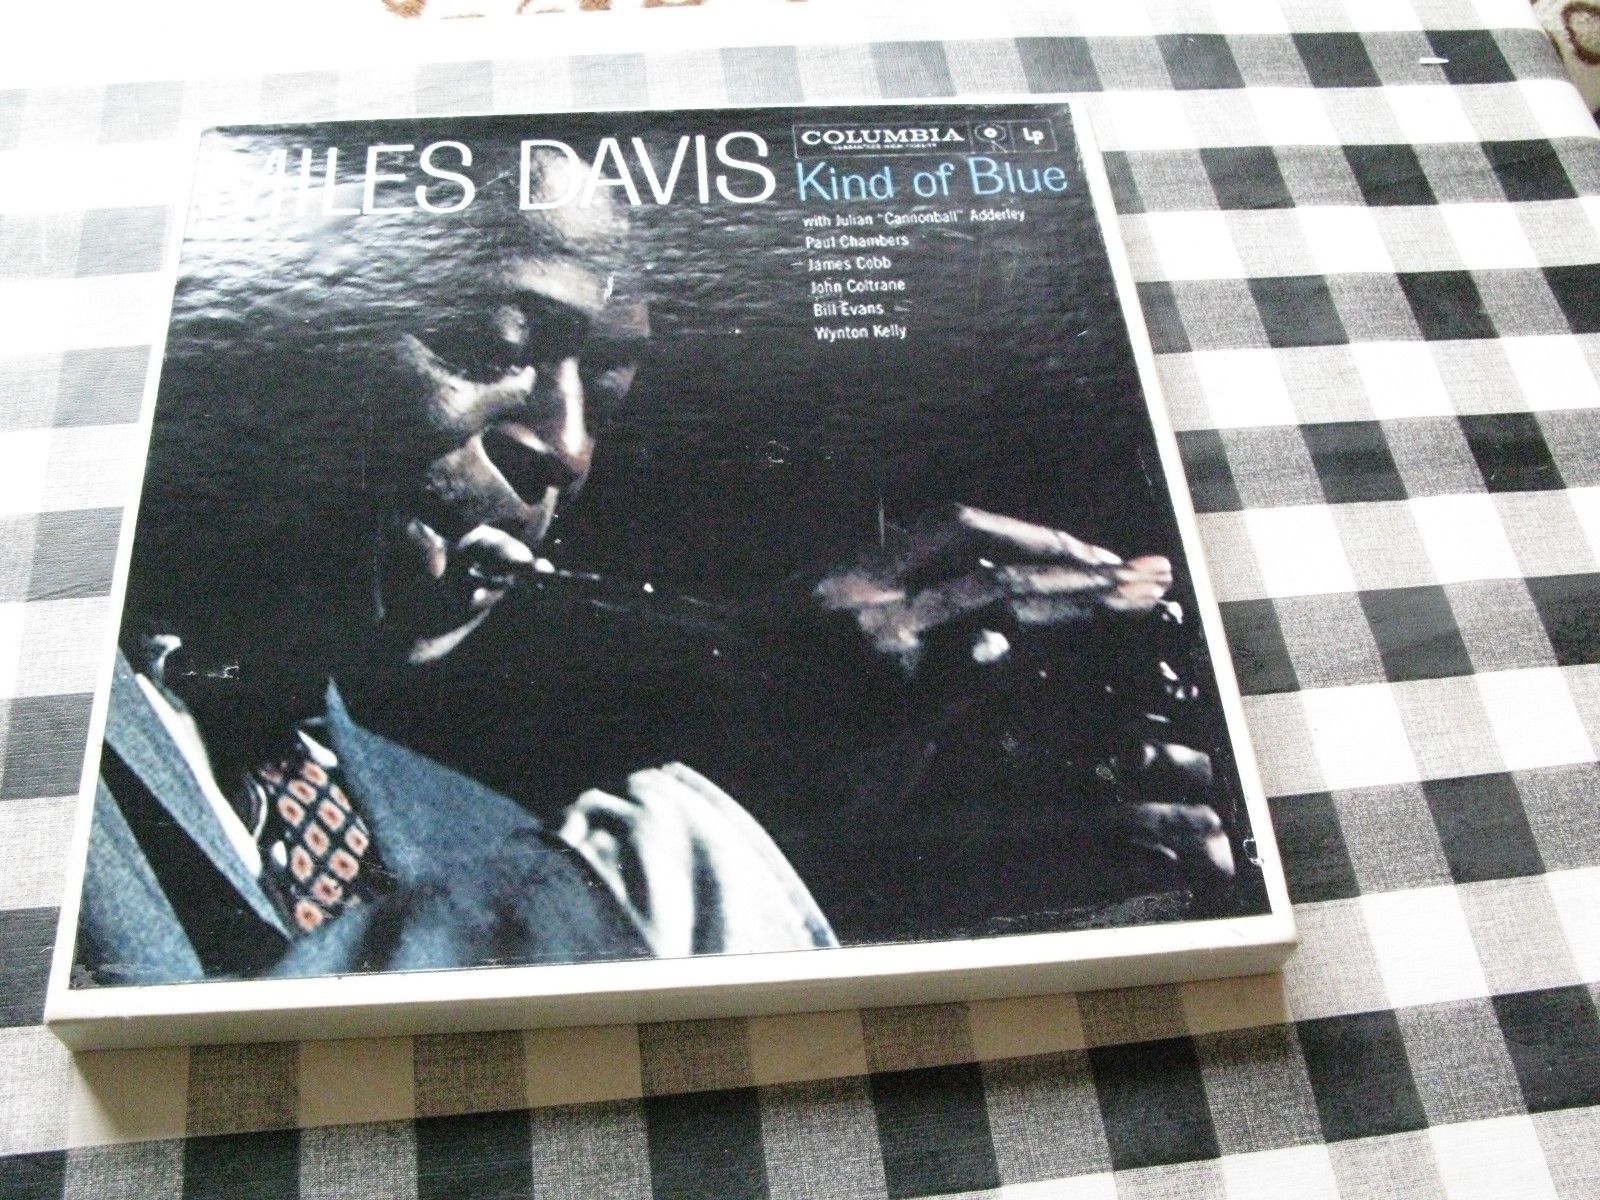  REEL TO REEL TAPE 2TR 15 IPS Miles Davis Kind Of Blue. Studio  Recording Tape - auction details